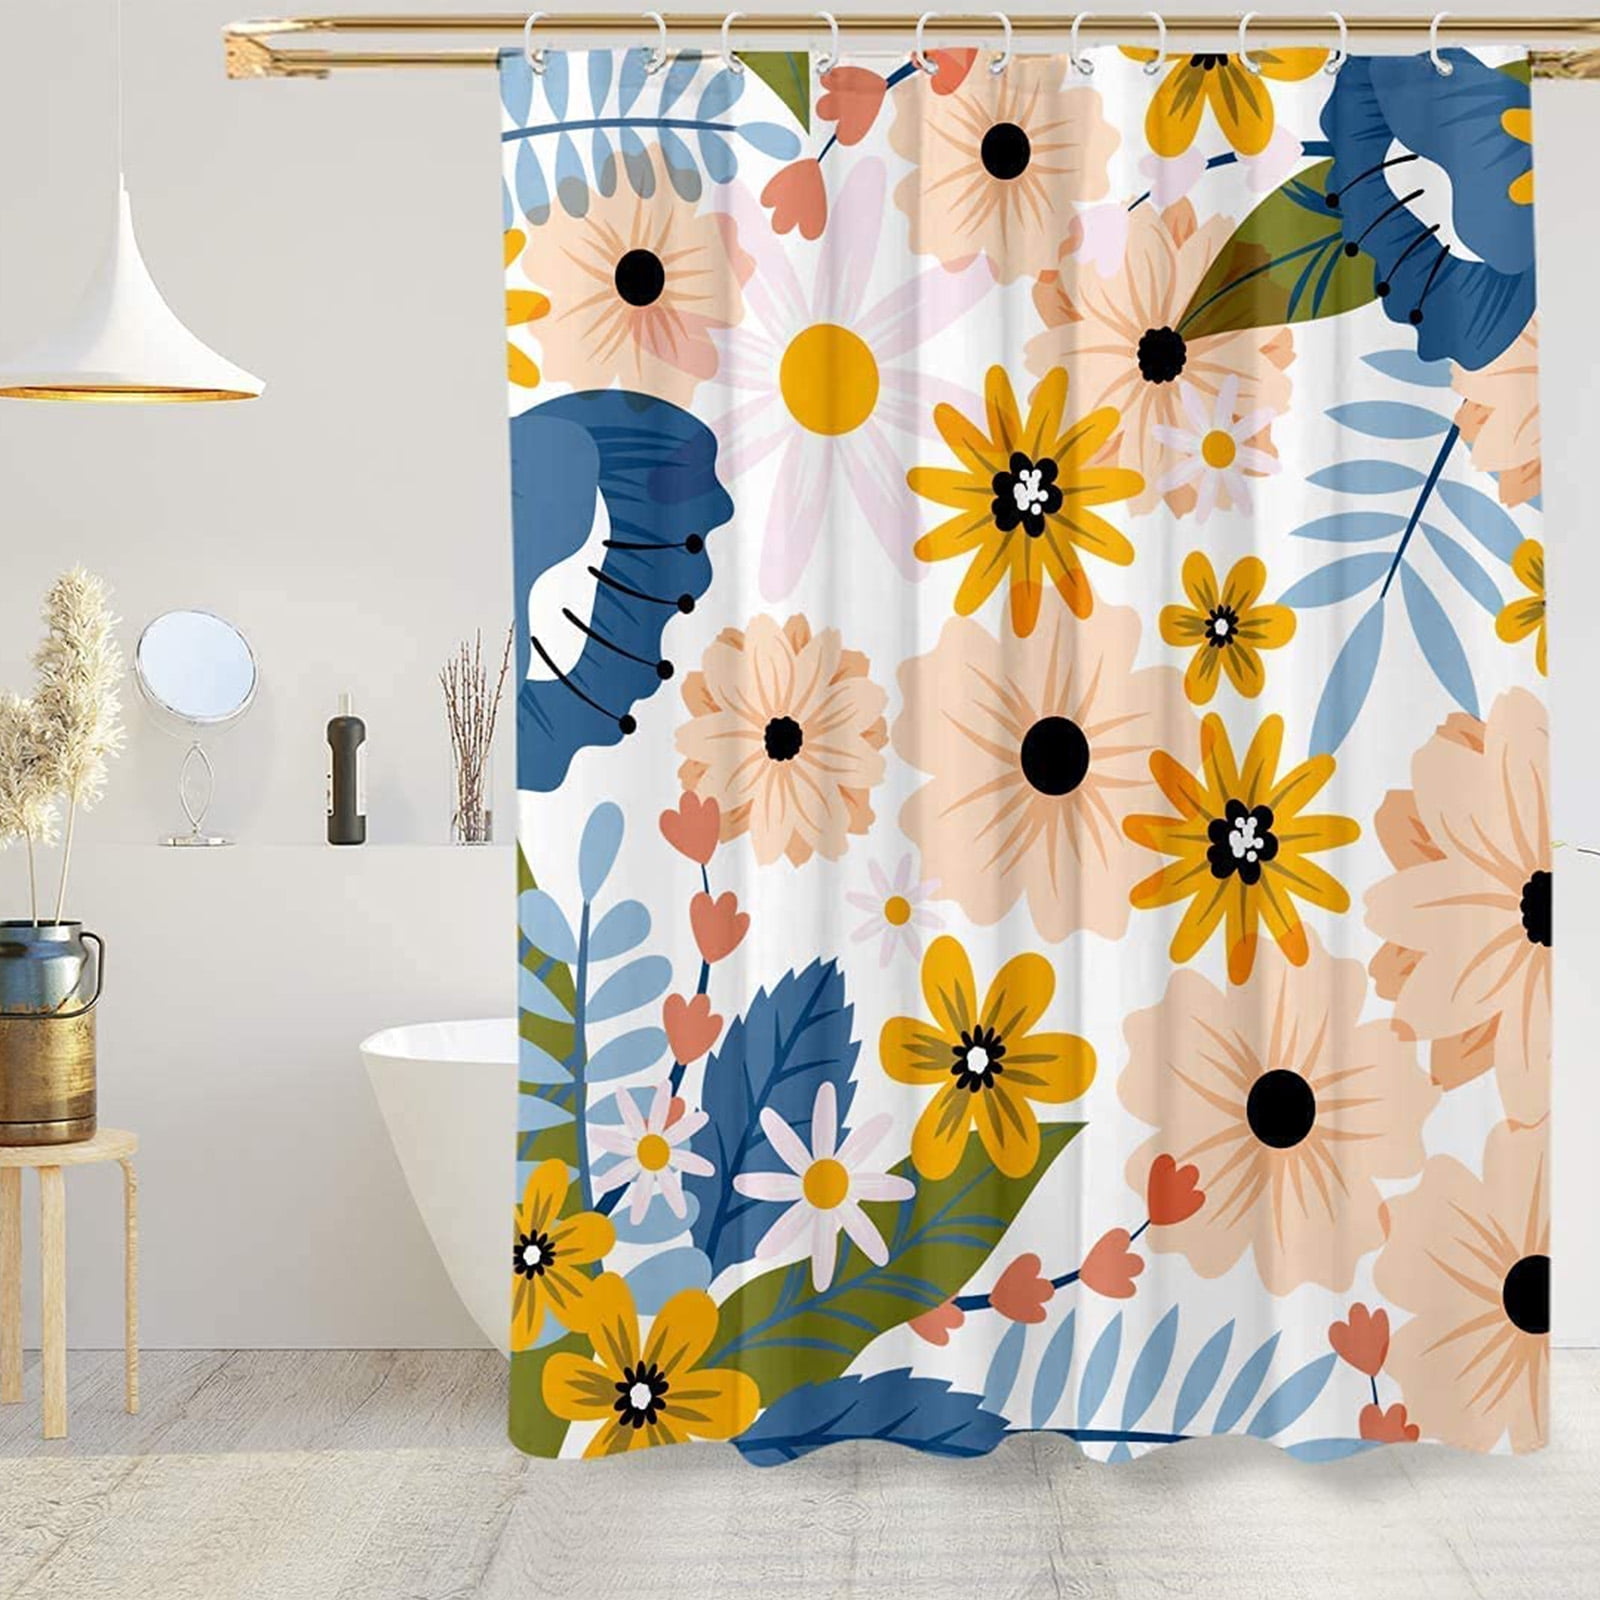 Tropical Fruit Banana Pattern Bathroom Shower Curtain Fabric 71*71inch 